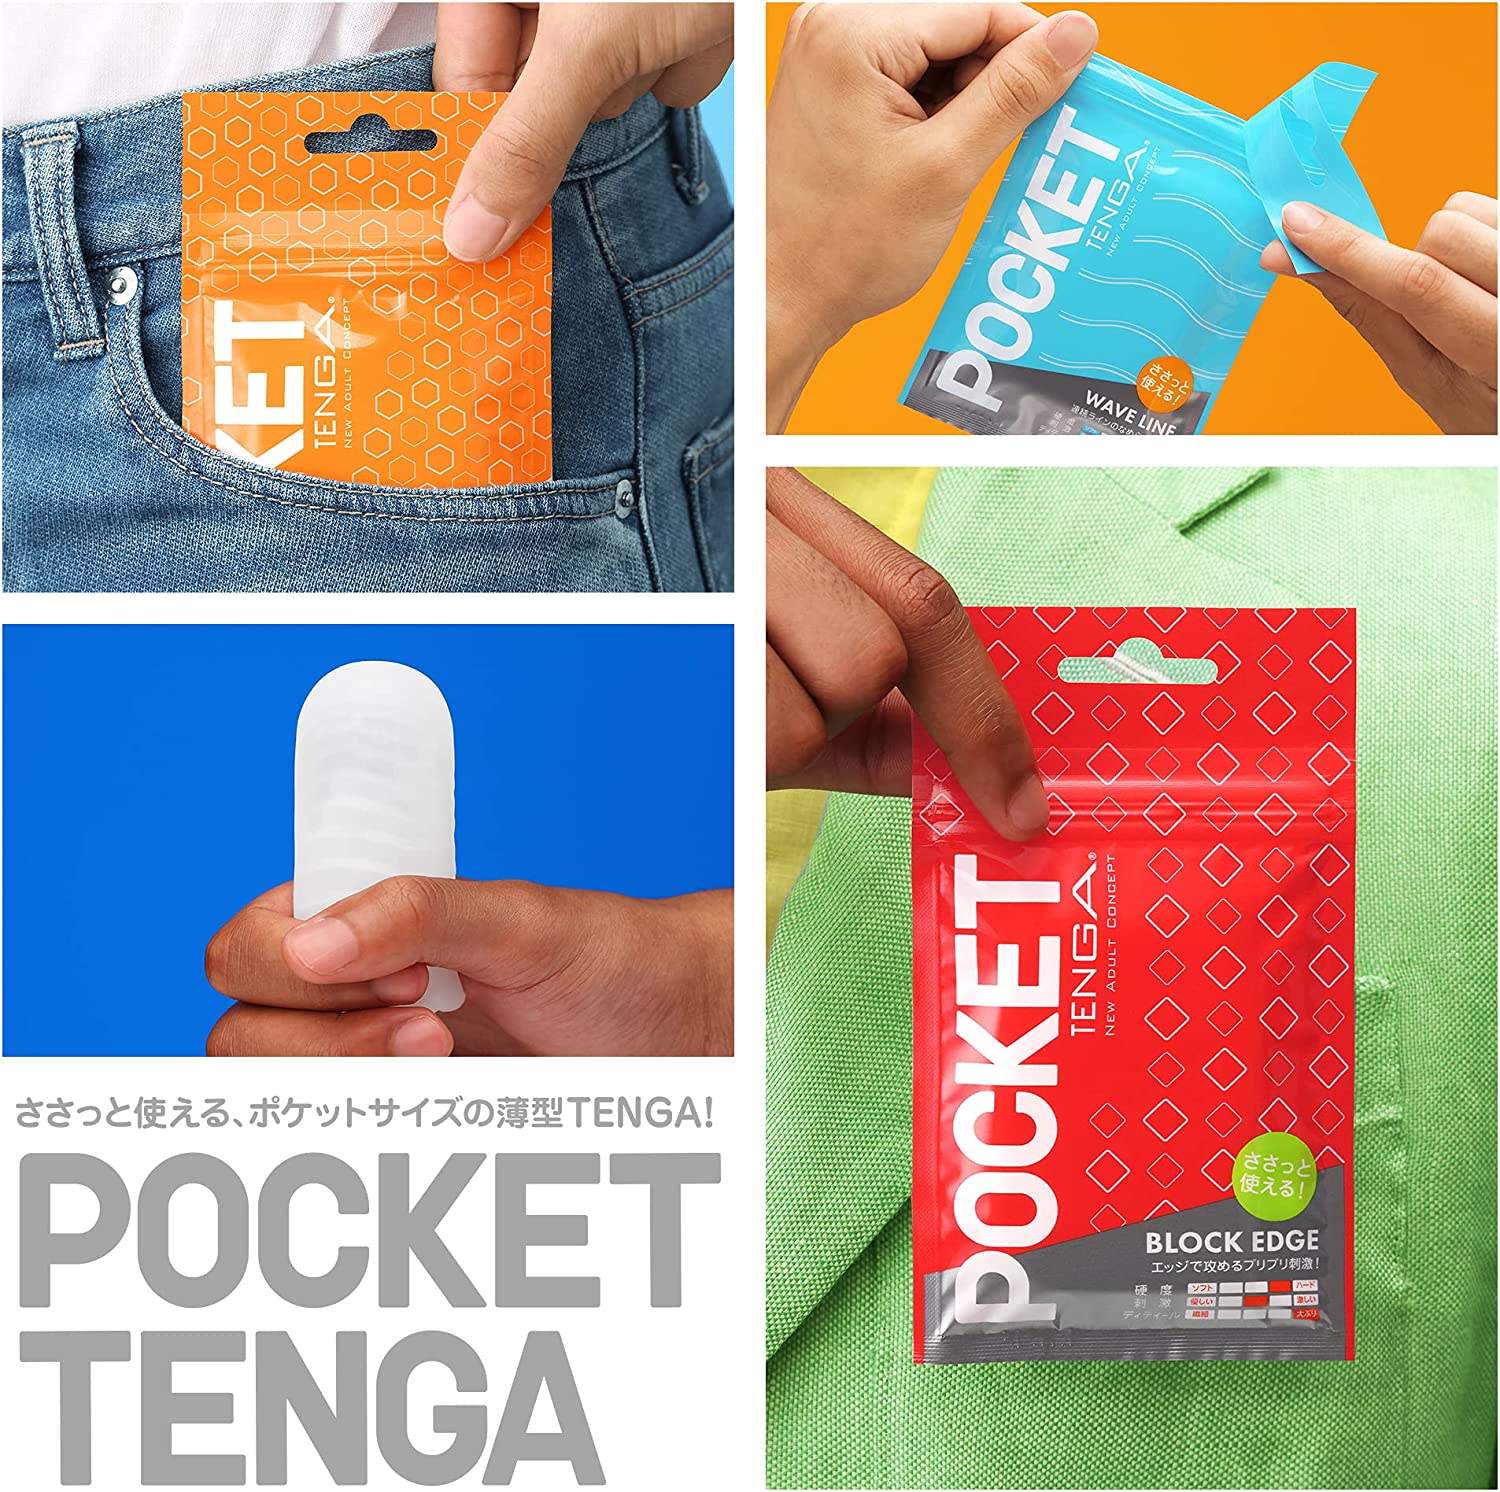 TENGA Pocket POT 001-006 Complete Set(6 Pack)